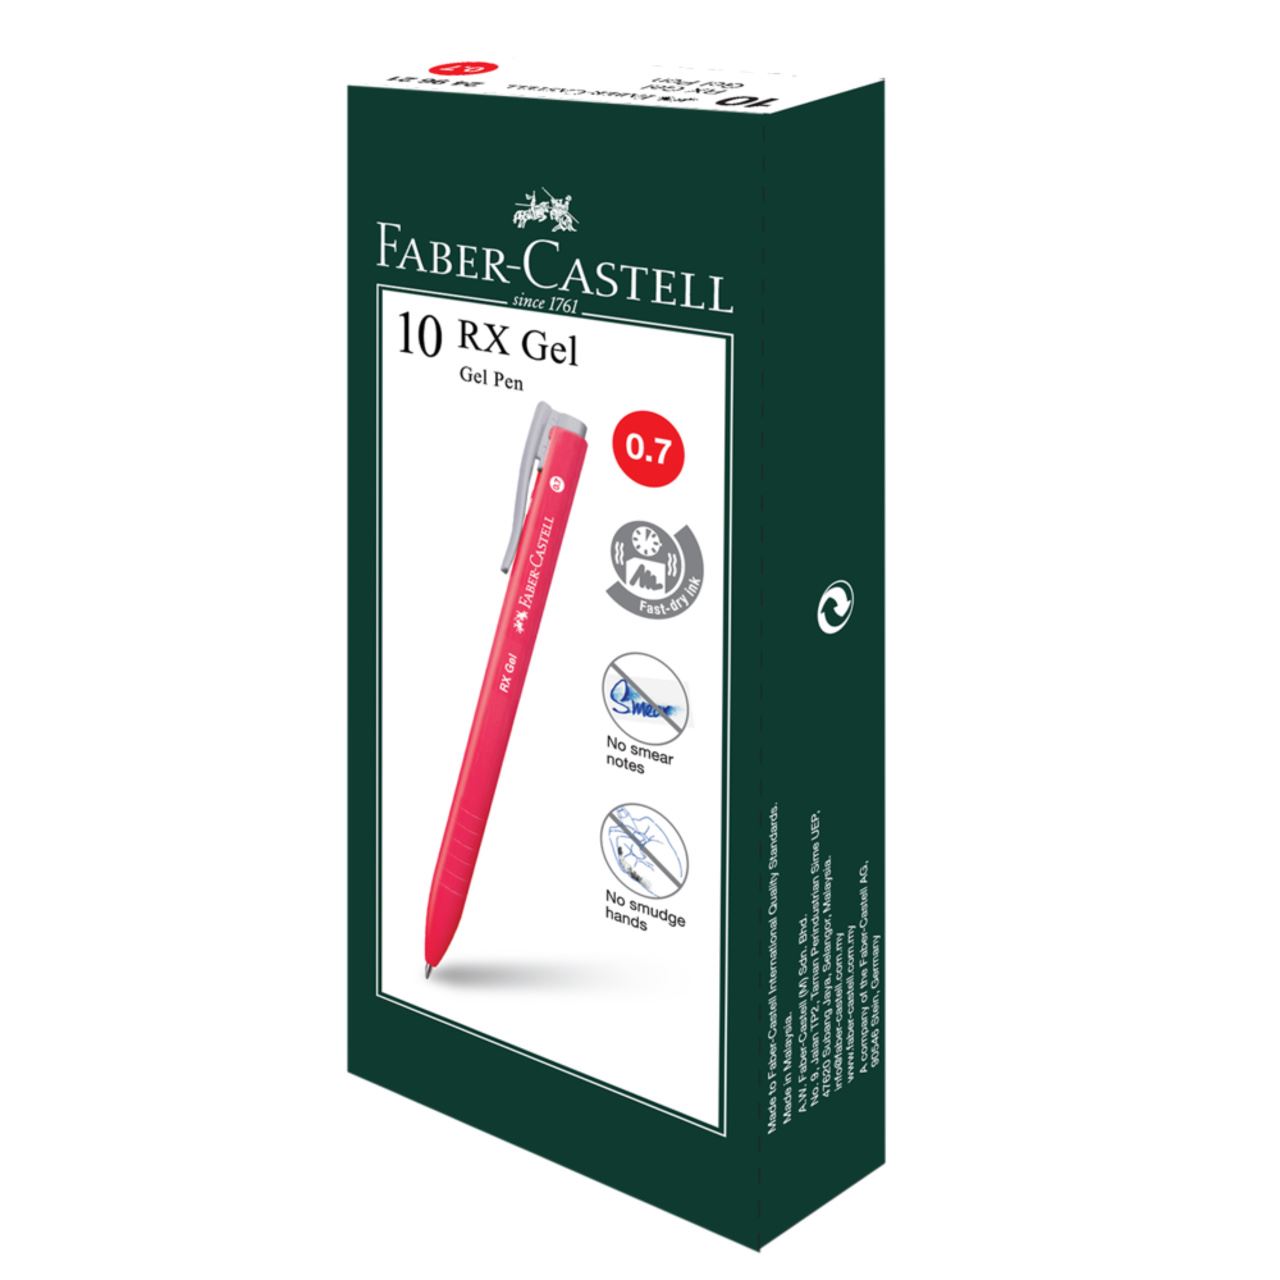 Faber-Castell - Gel pen RX Gel, 0.7mm, red